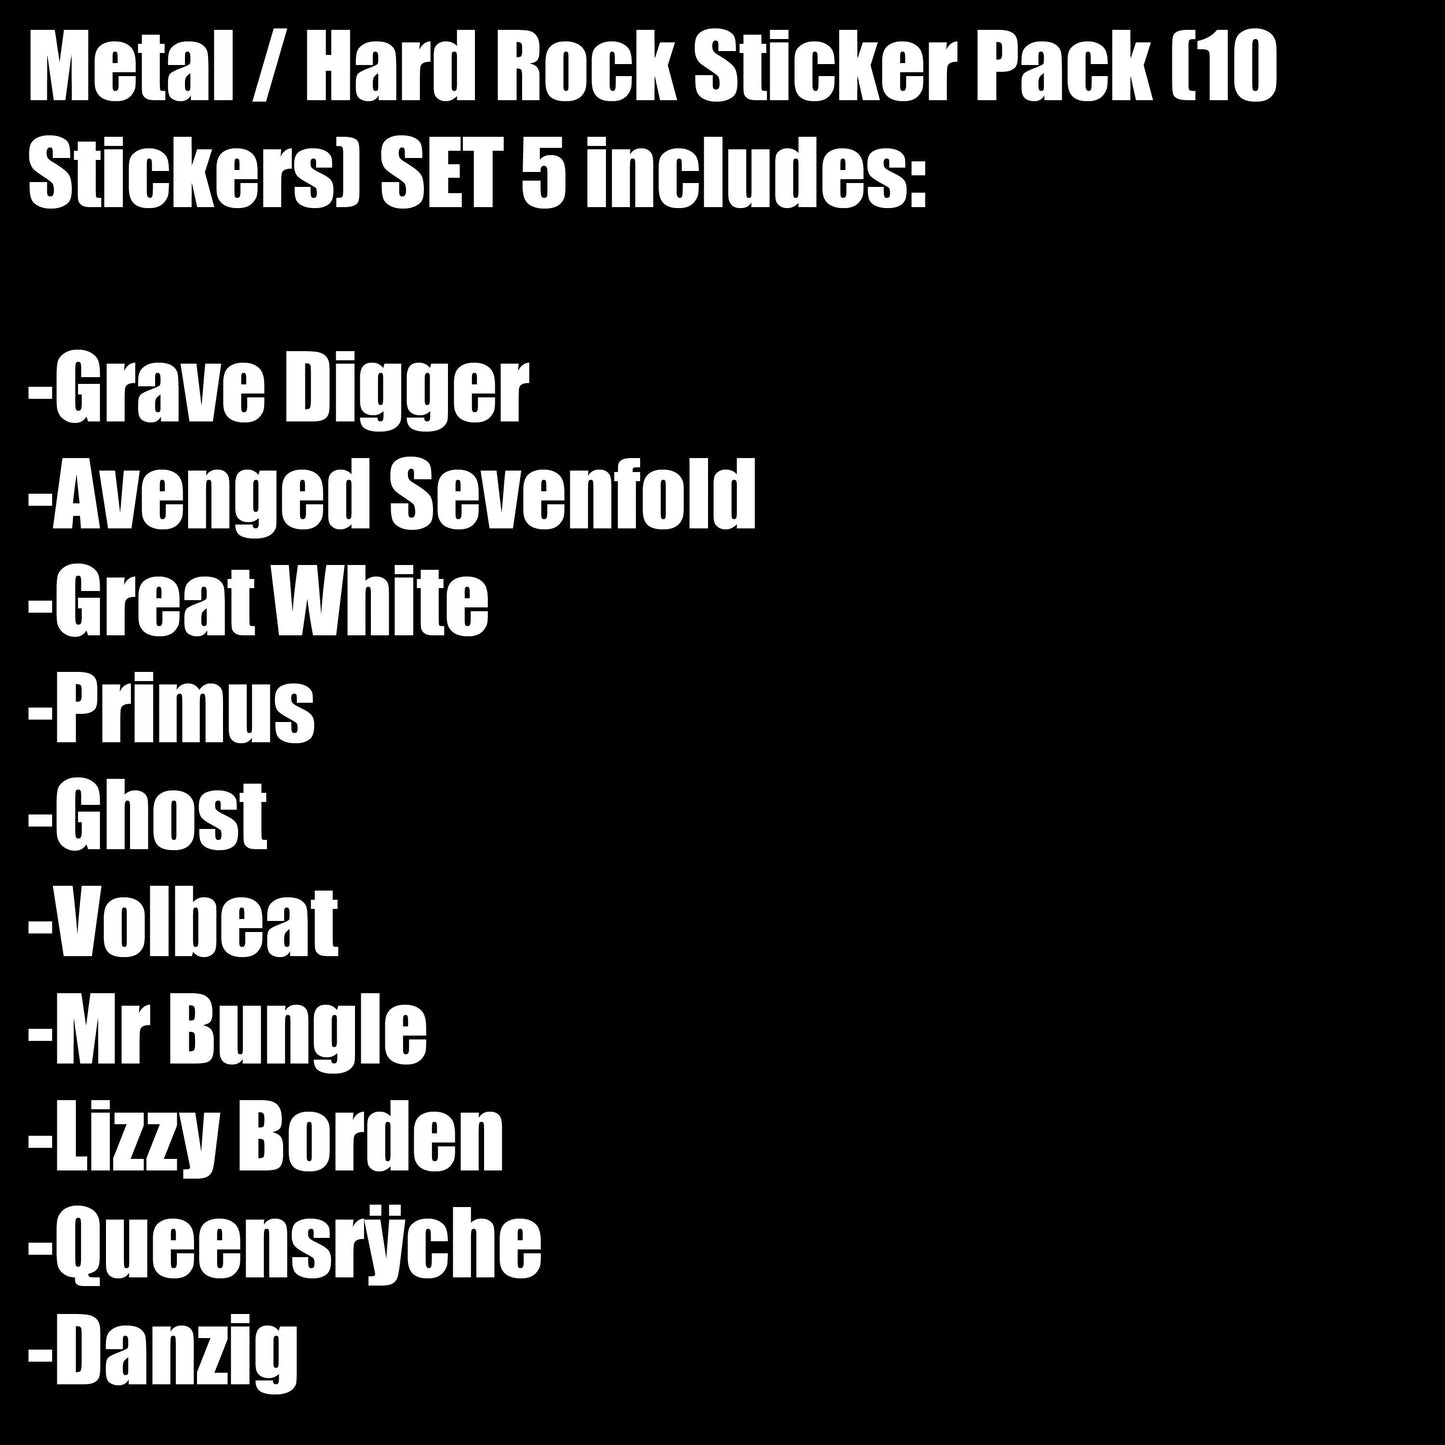 Metal / Hard Rock Sticker Pack (10 Stickers) SET 5